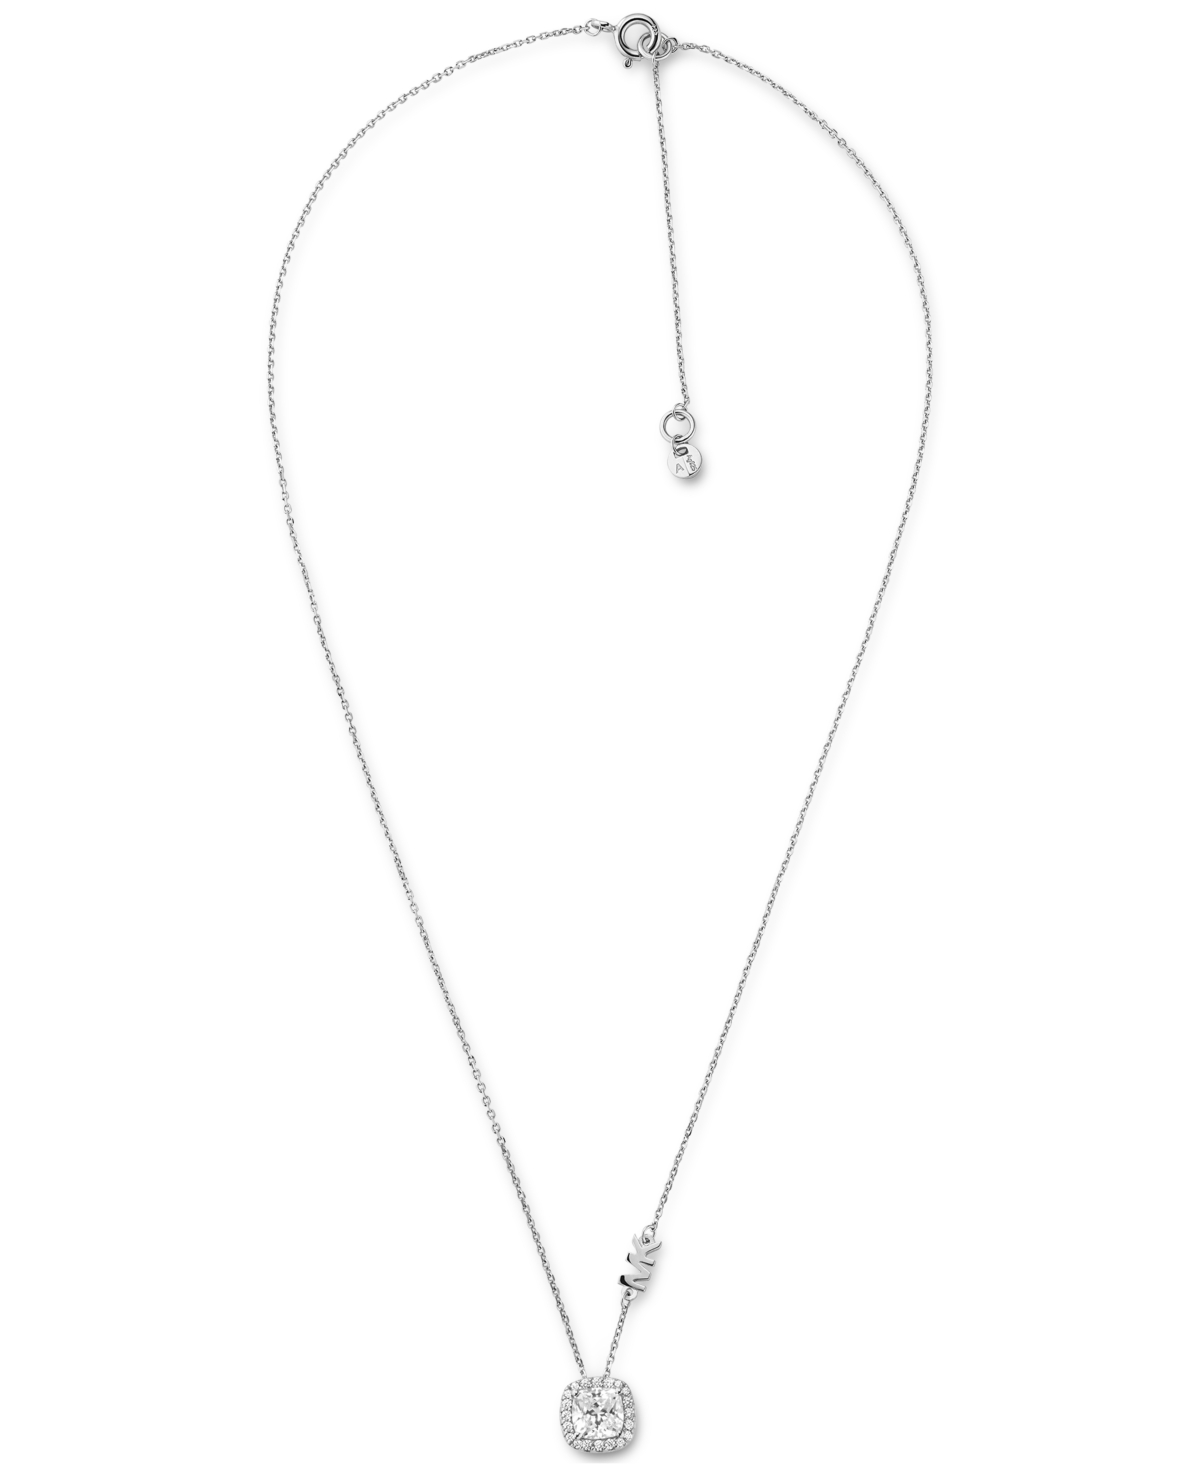 Michael Kors Silver-tone Halo Crystal Pendant Necklace, 16" + 2" Extender